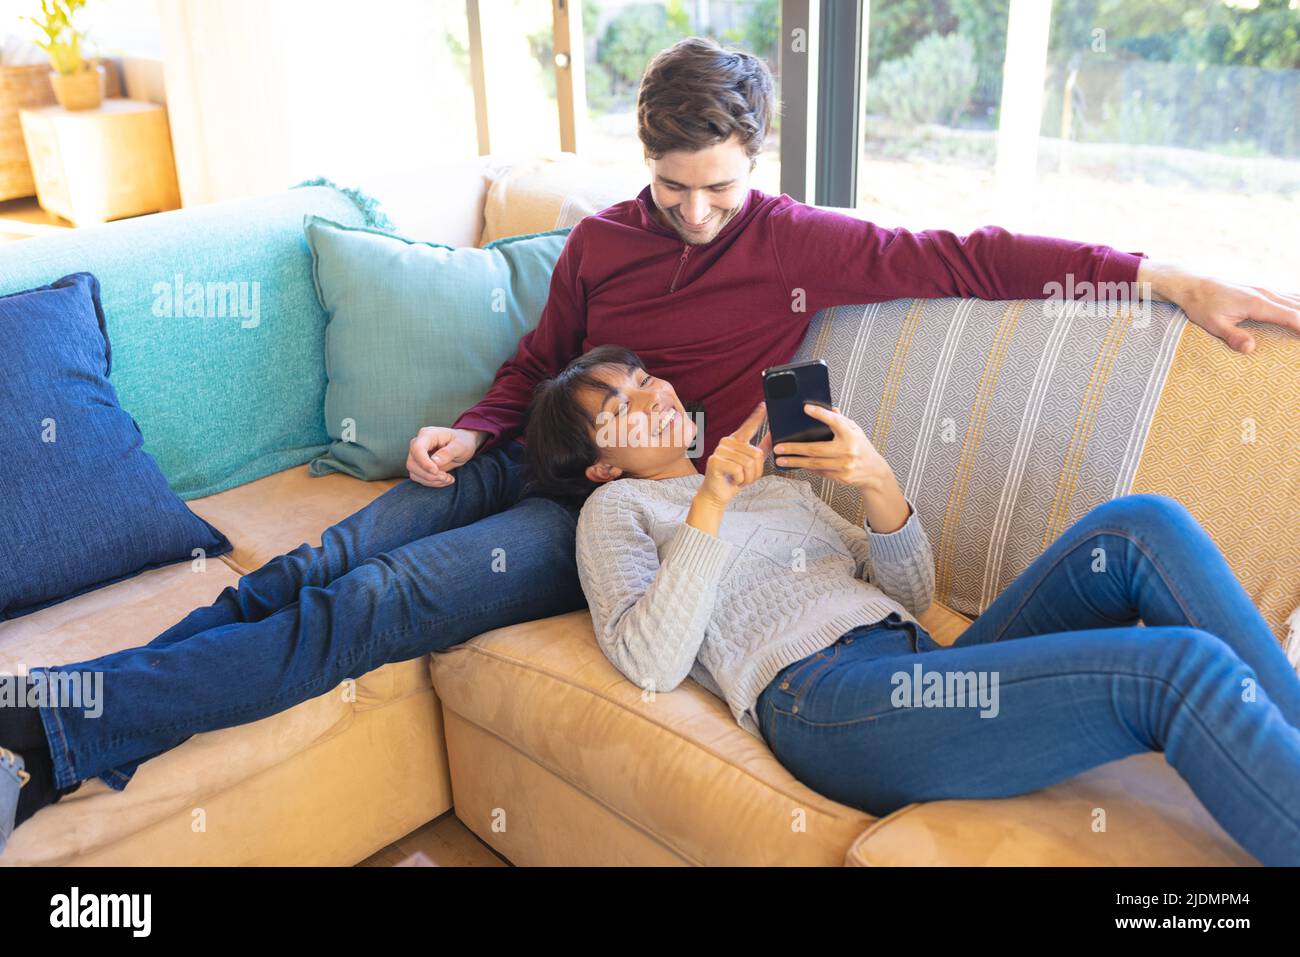 Smiling asian girlfriend using smartphone while lying on caucasian boyfriend's lap on sofa Stock Photo